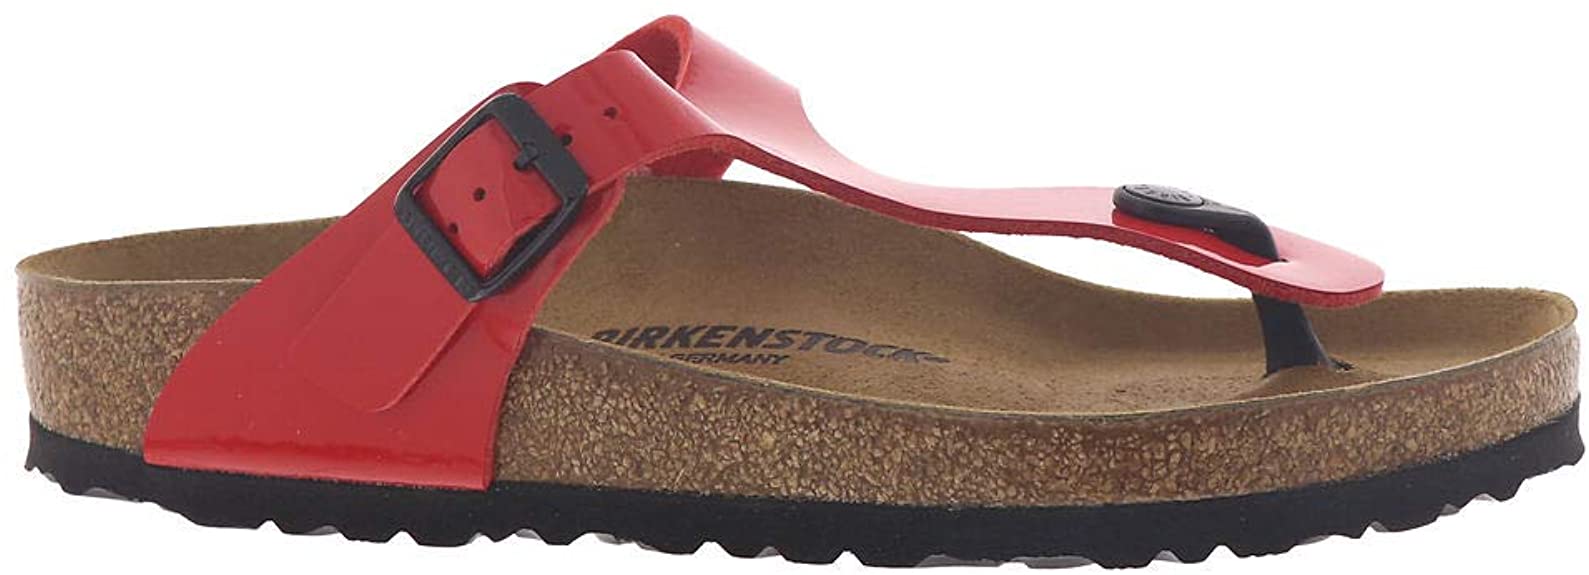 Birkenstock Gizeh Birko-Flor Patent - Womens - Thong Sandals - Cherry - 42